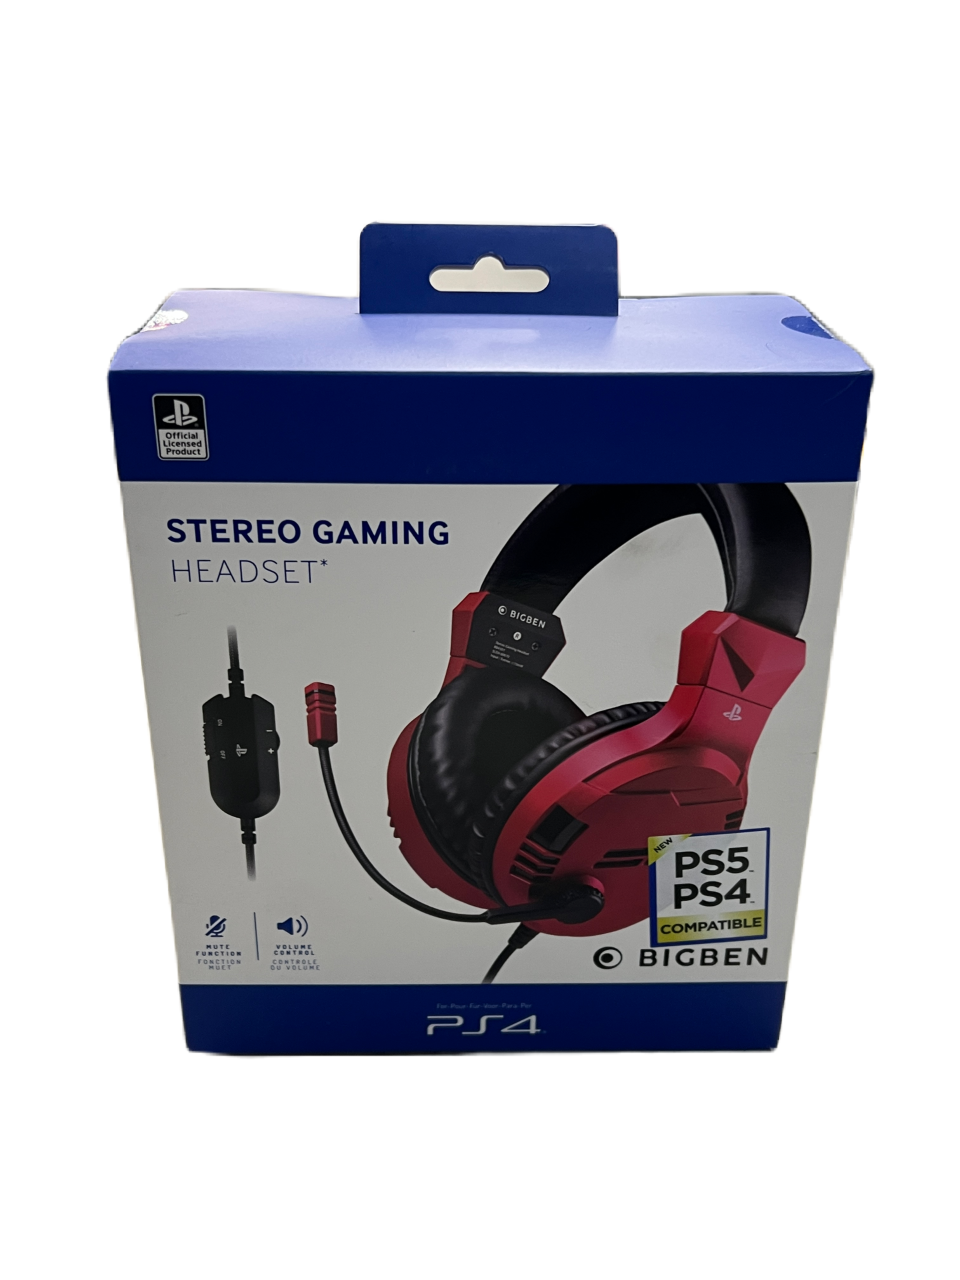 ﻿Playstation 4 HW Bigben Stereo Gaming Headset v3. Brand New.